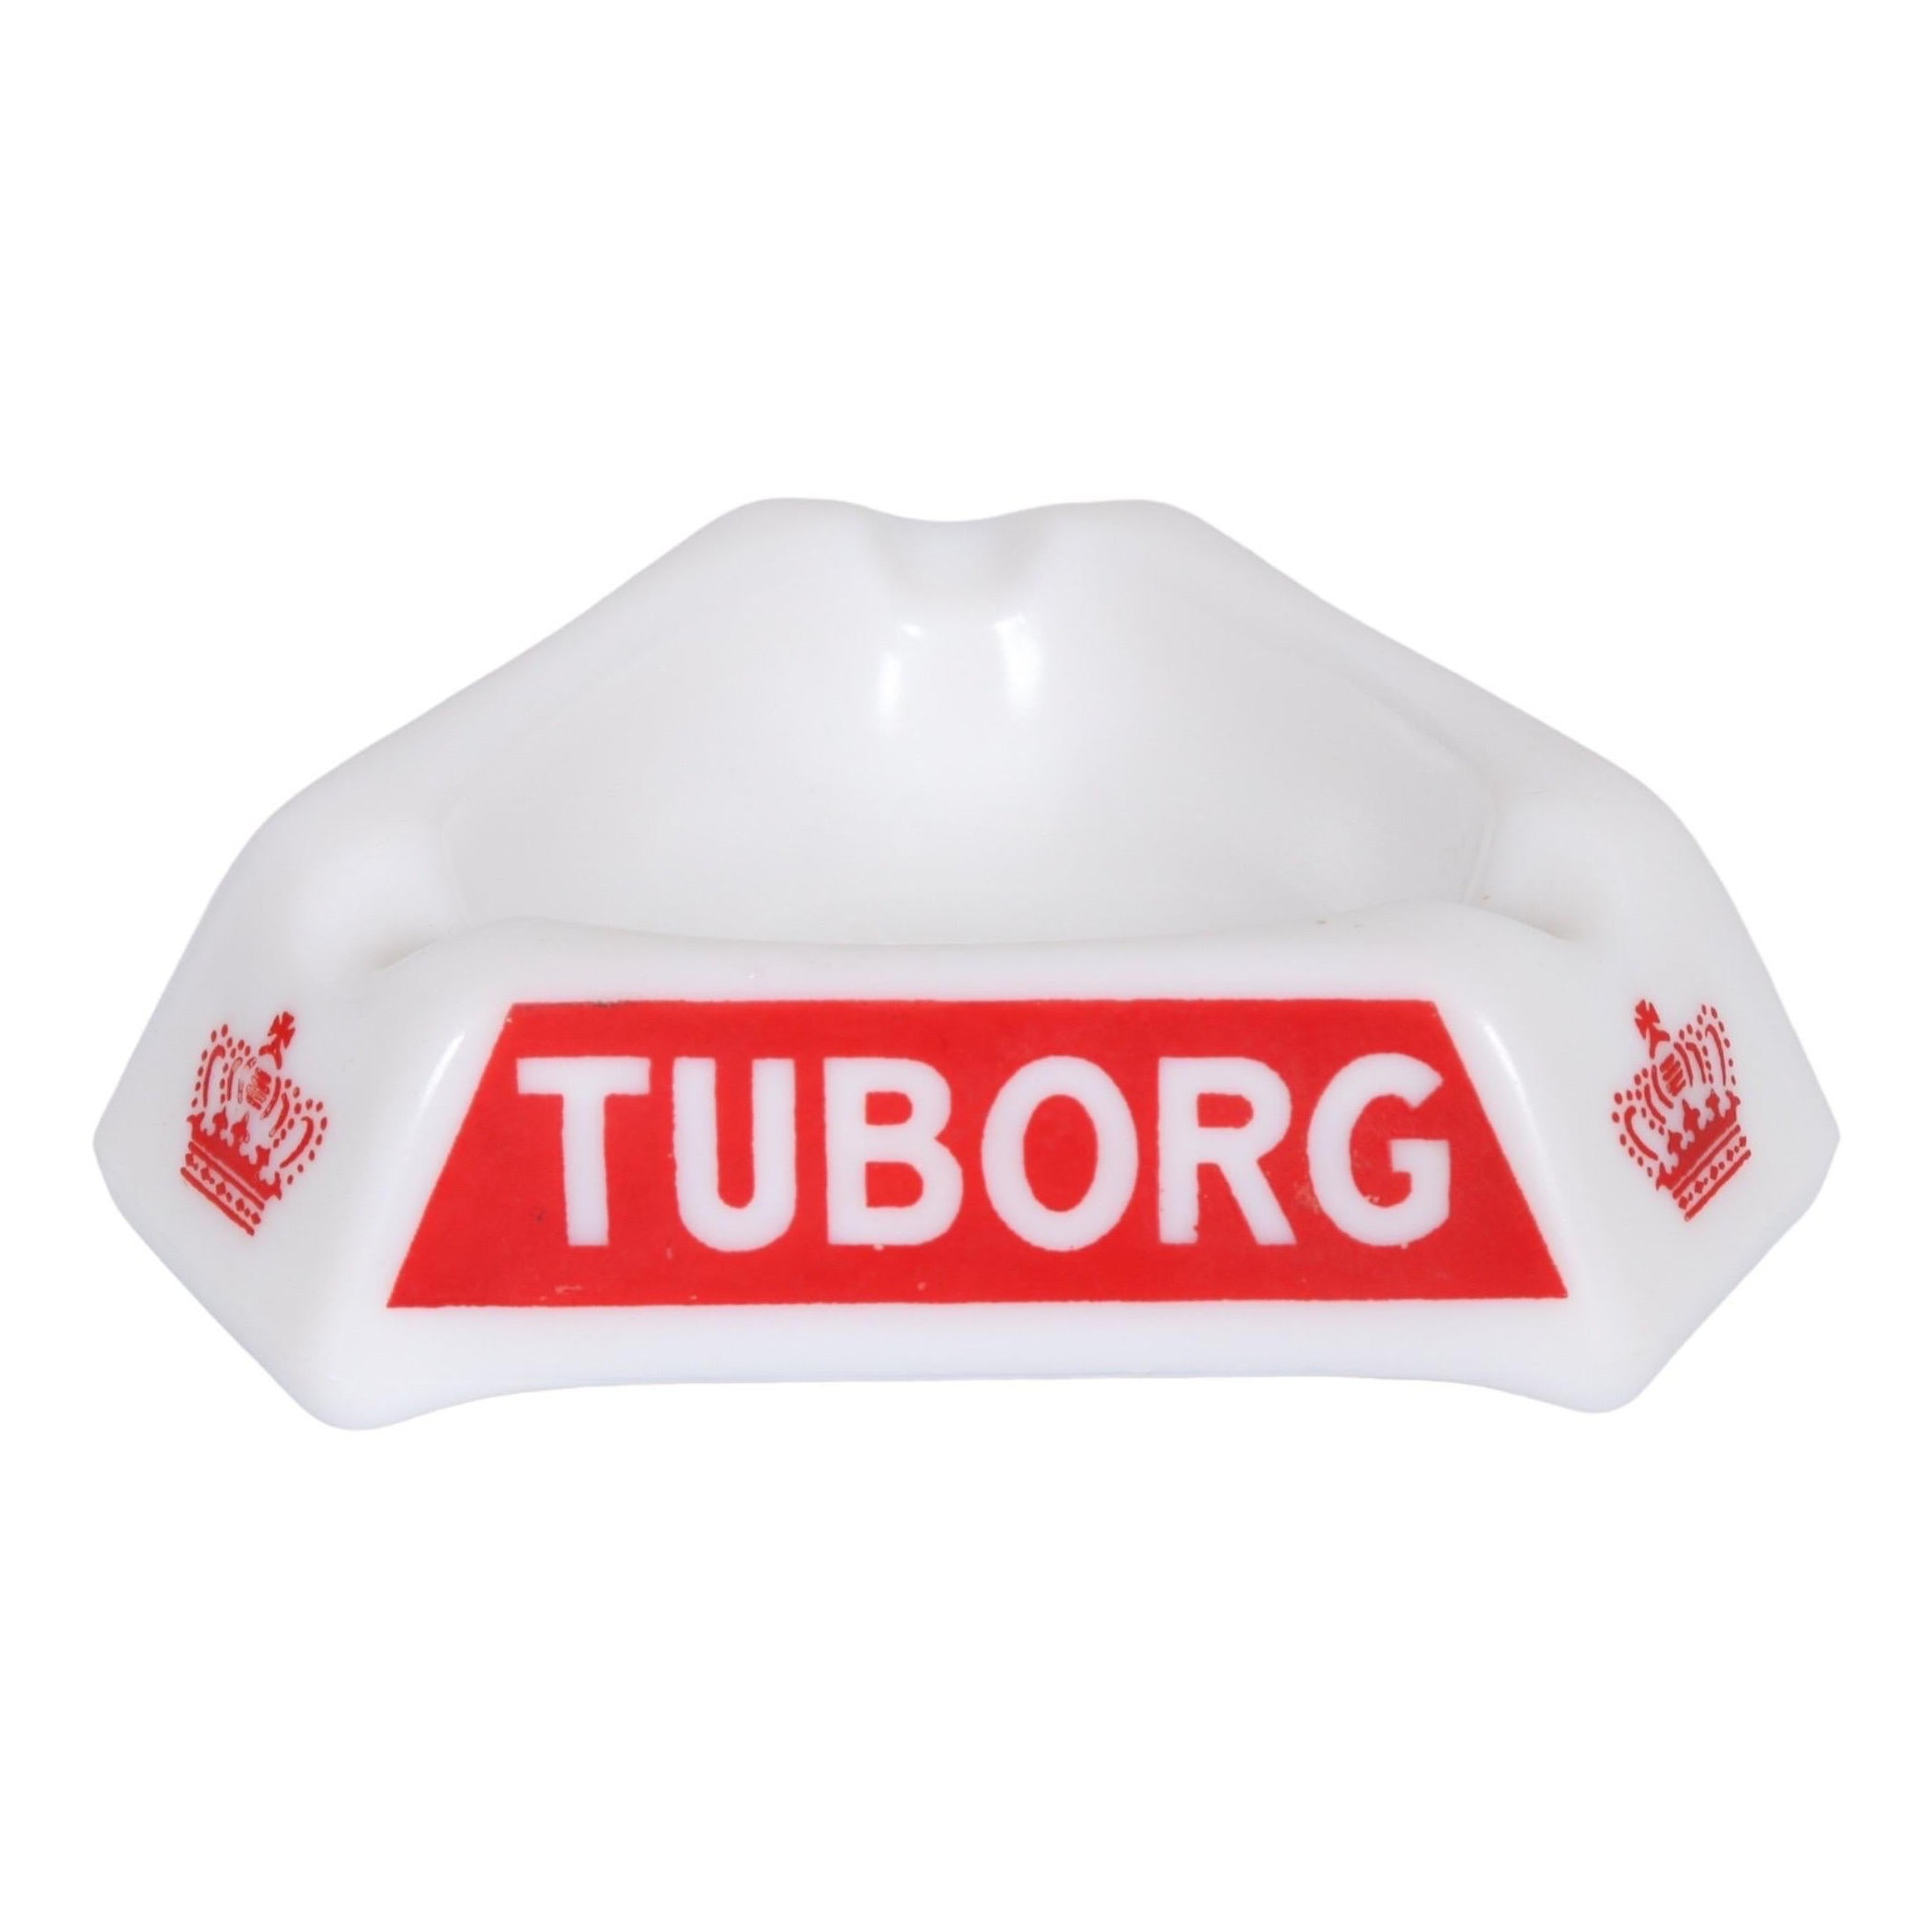 Tuborg French Opalex Ashtray For Sale